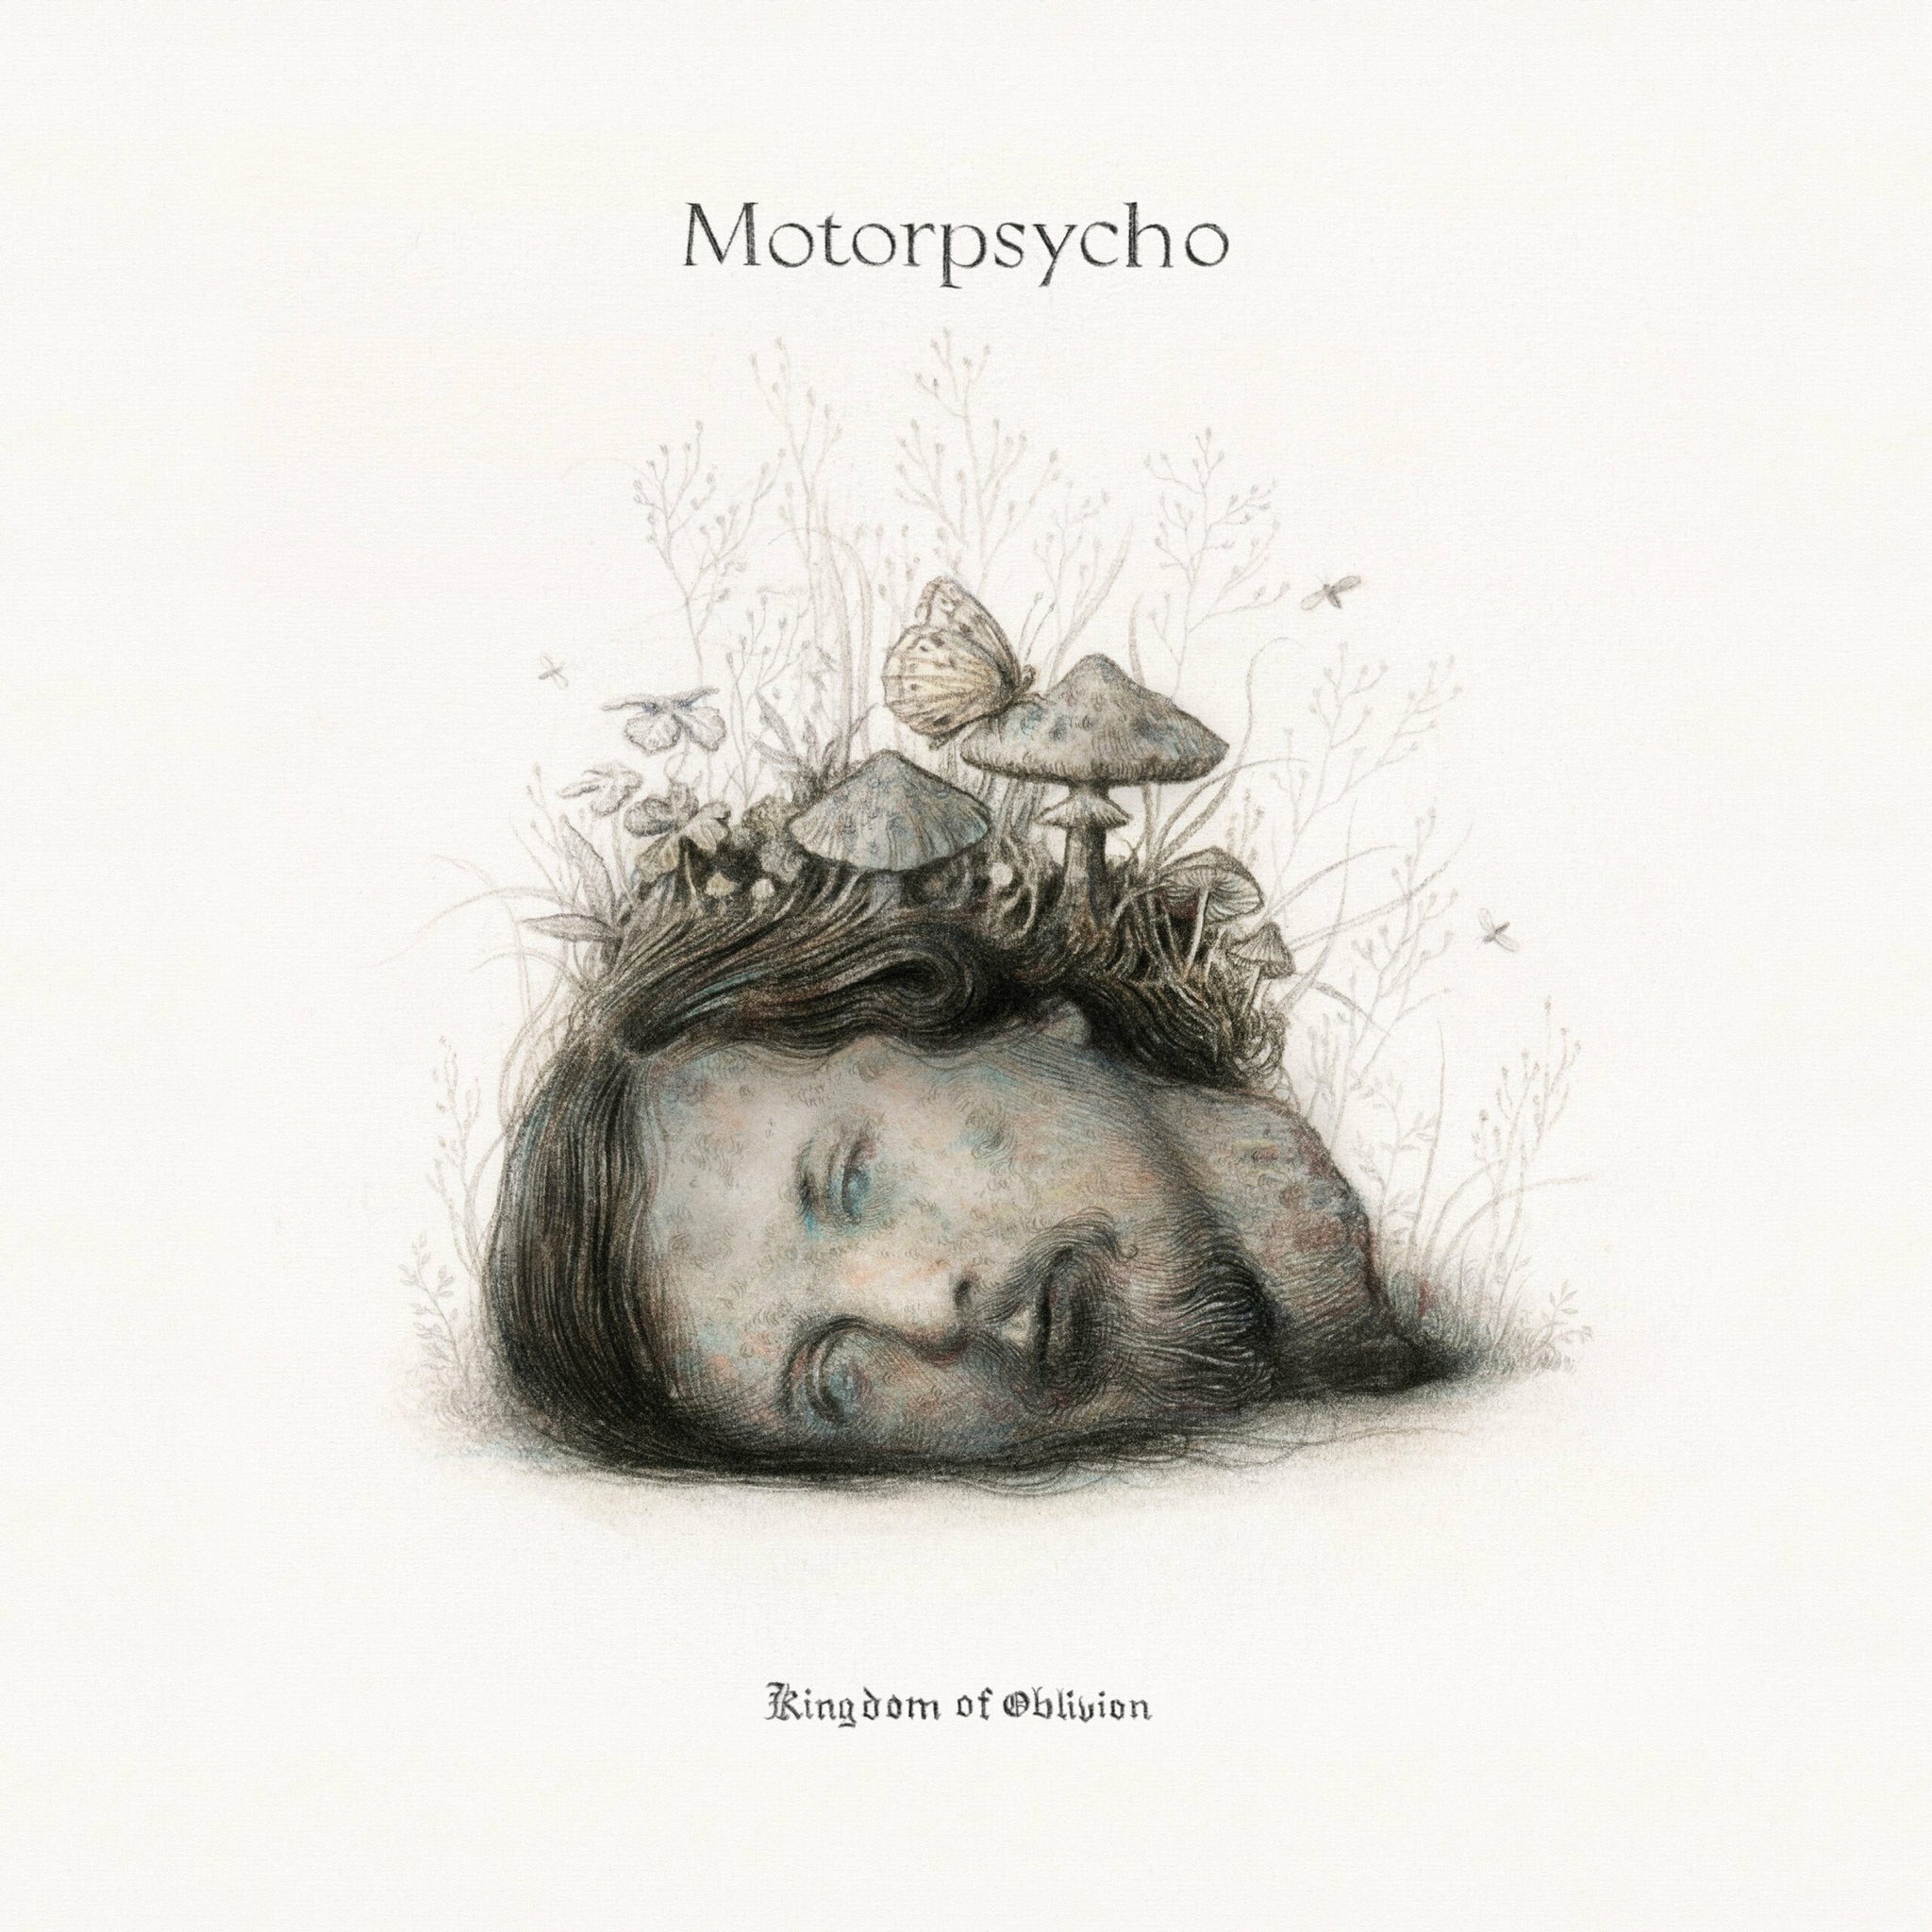 MOTORPSYCHO - Kingdom of Oblivion - LP - Clear Vinyl